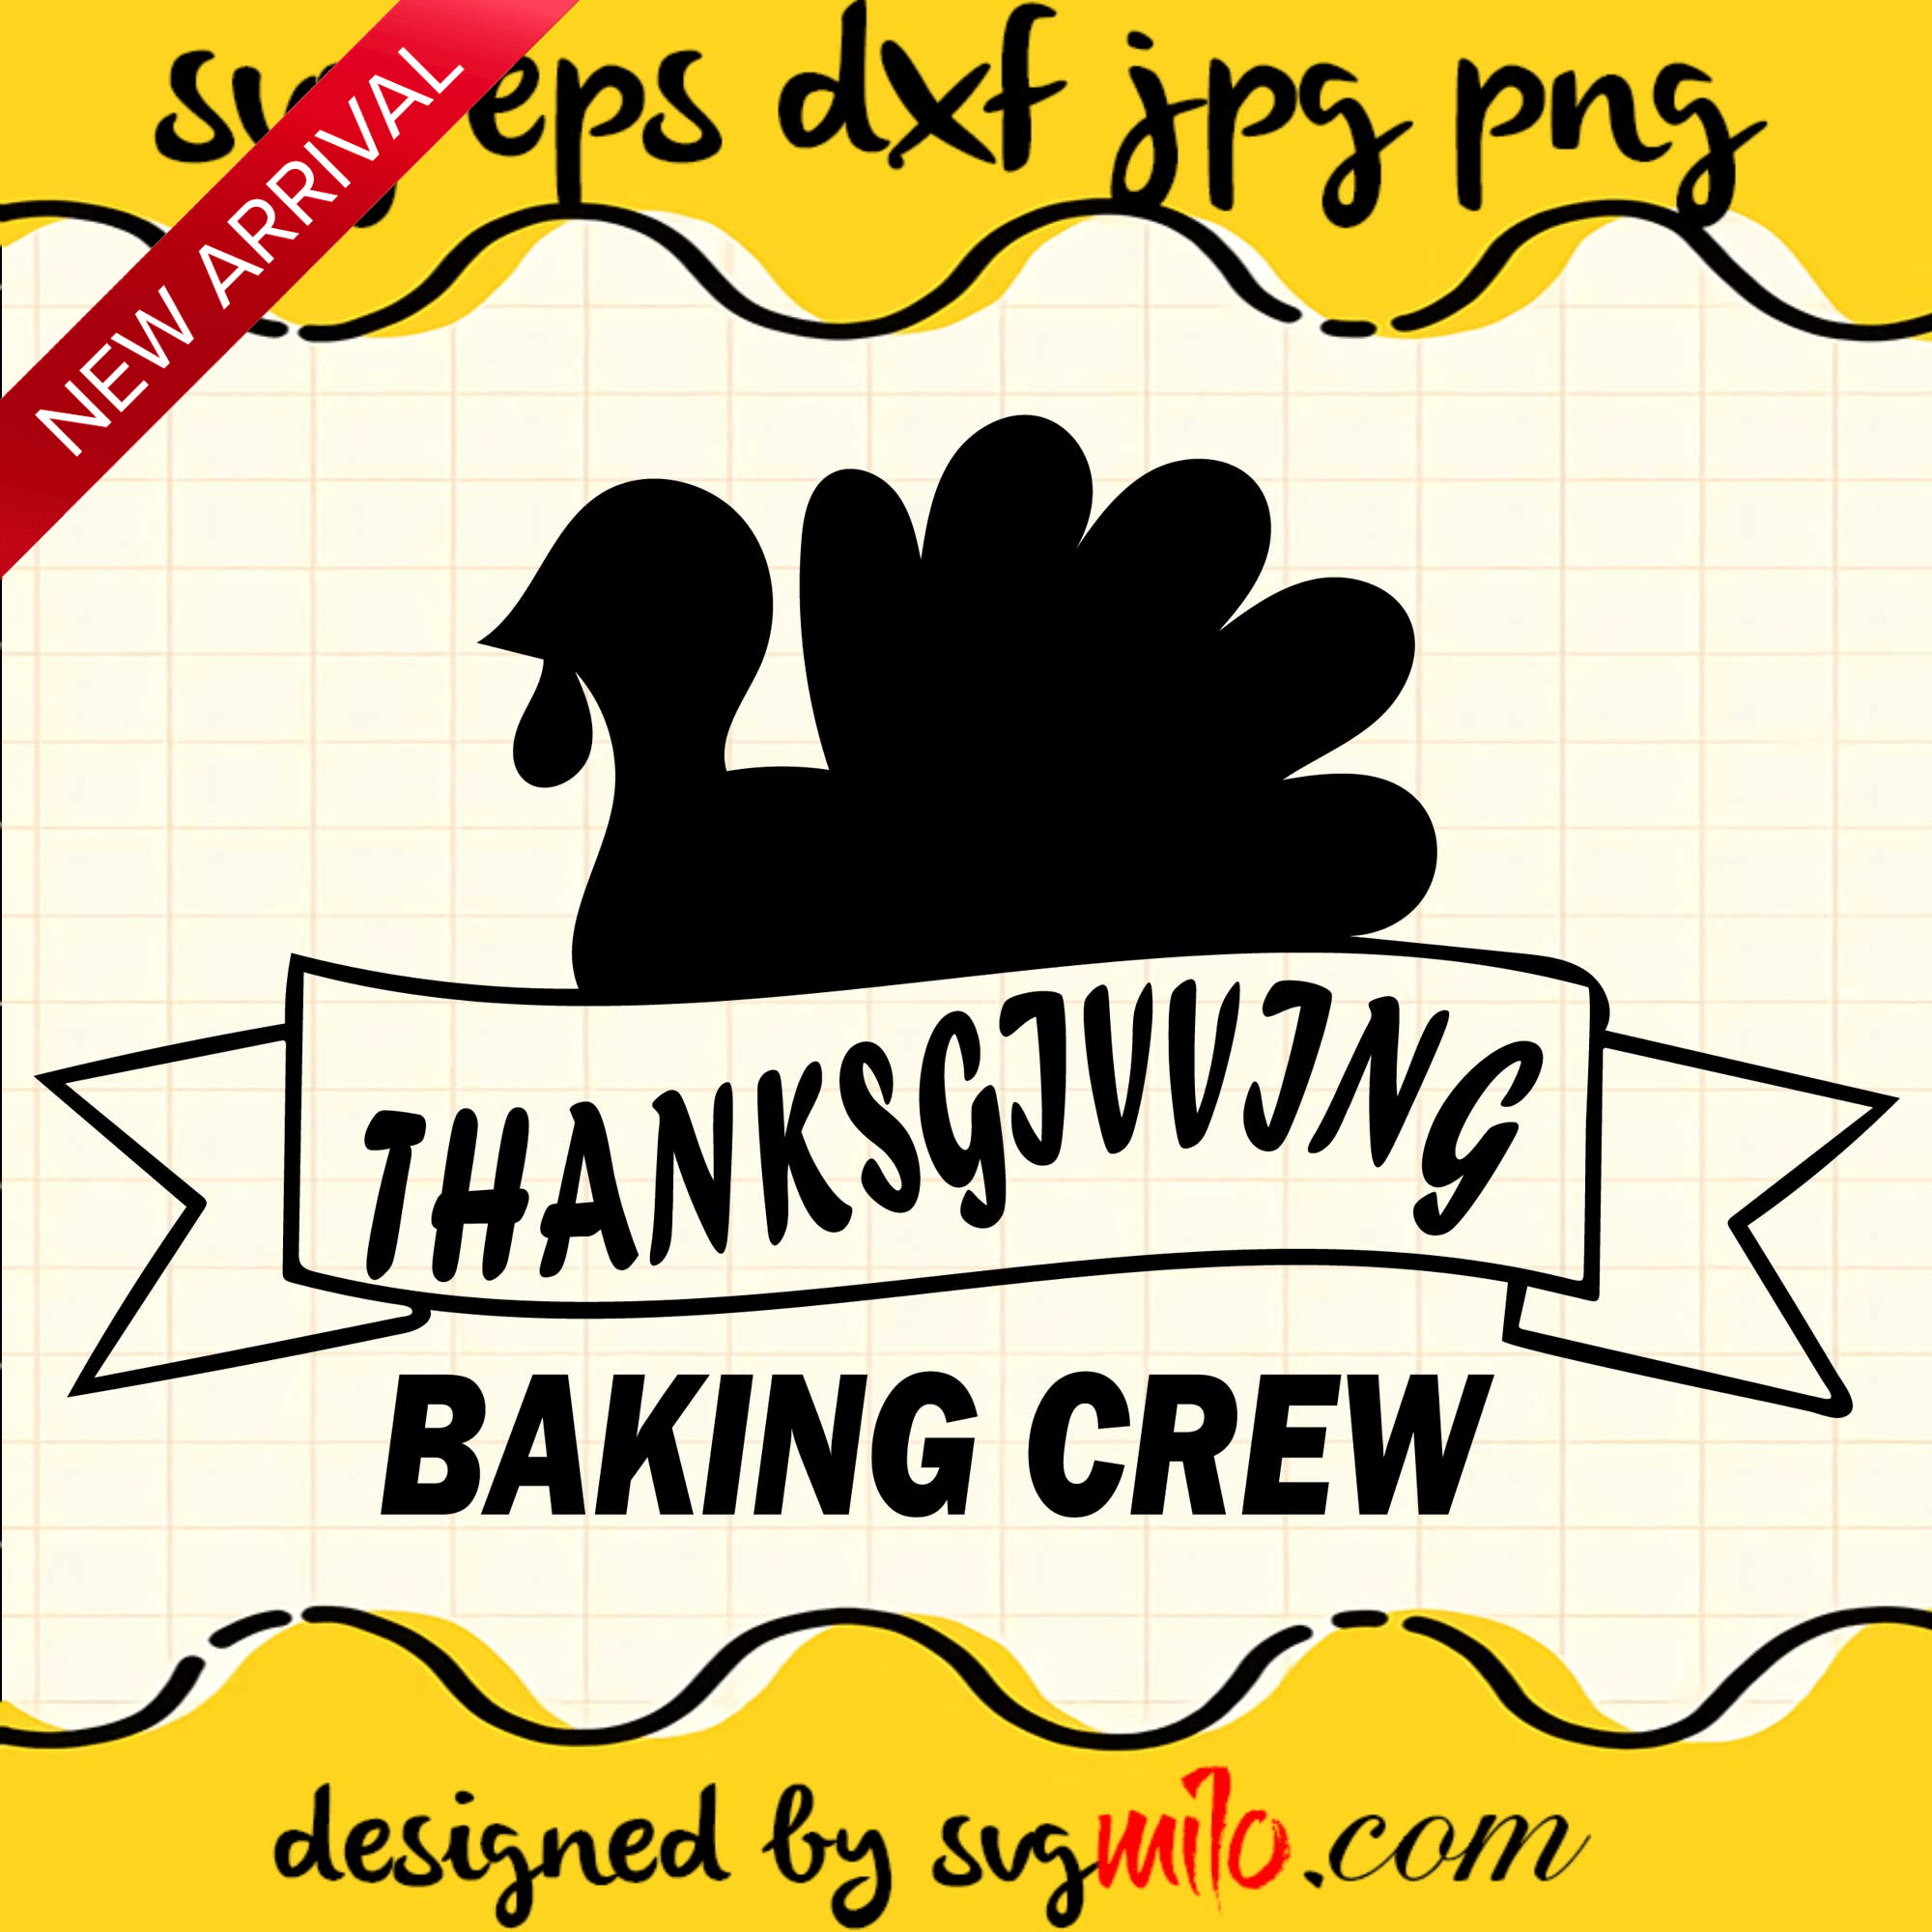 Thacksgiving Baking Crew File SVG Cricut cut file, Silhouette cutting file,Premium quality SVG - SVGMILO